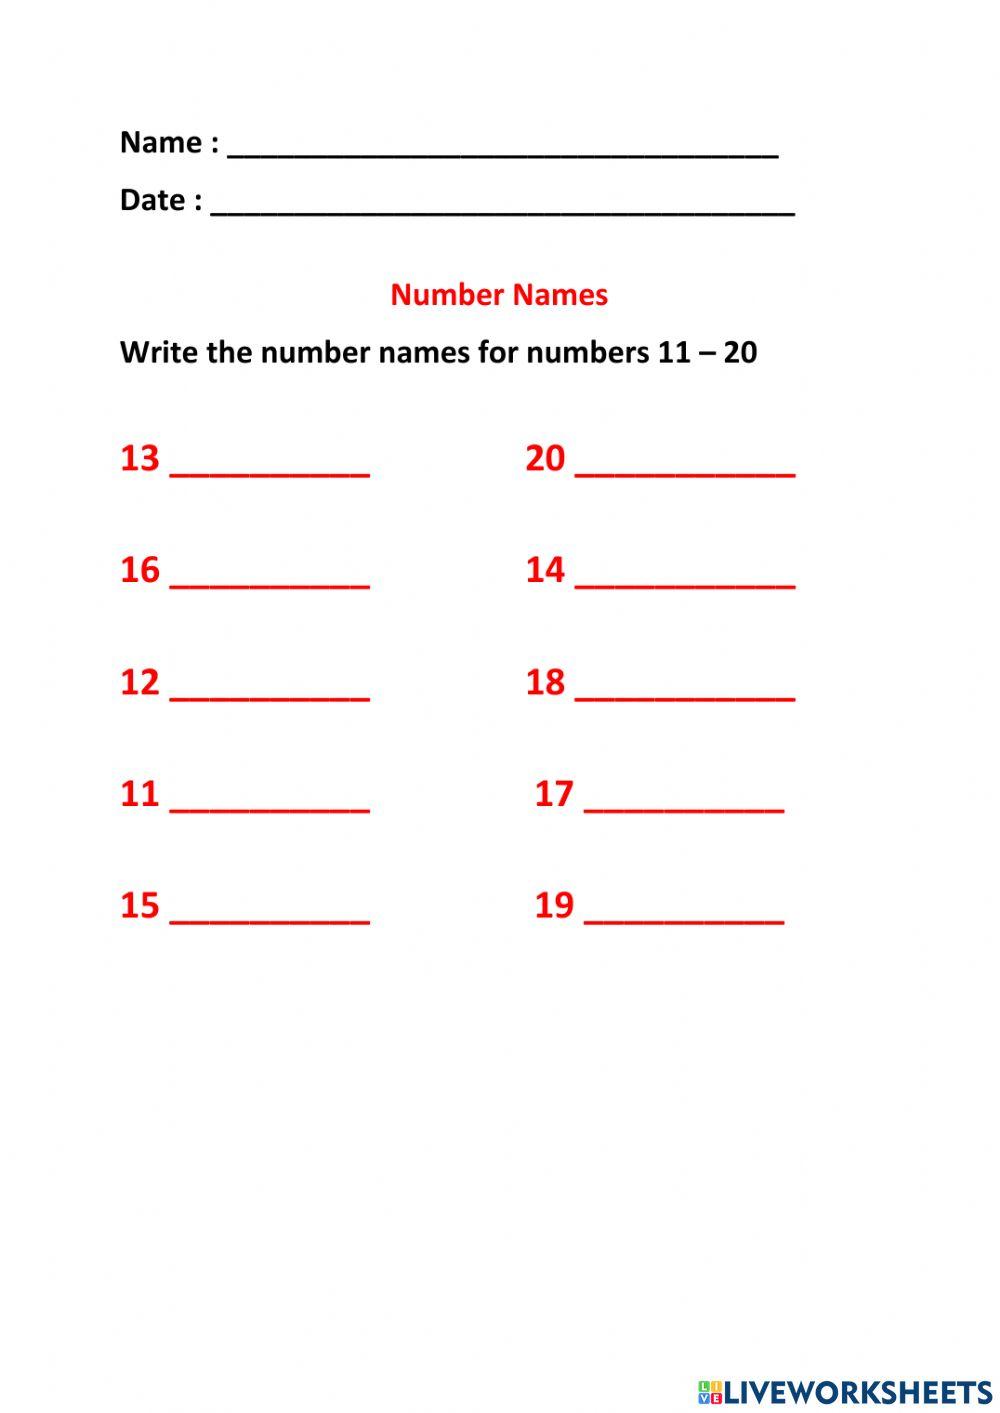 Number Names 11 - 20